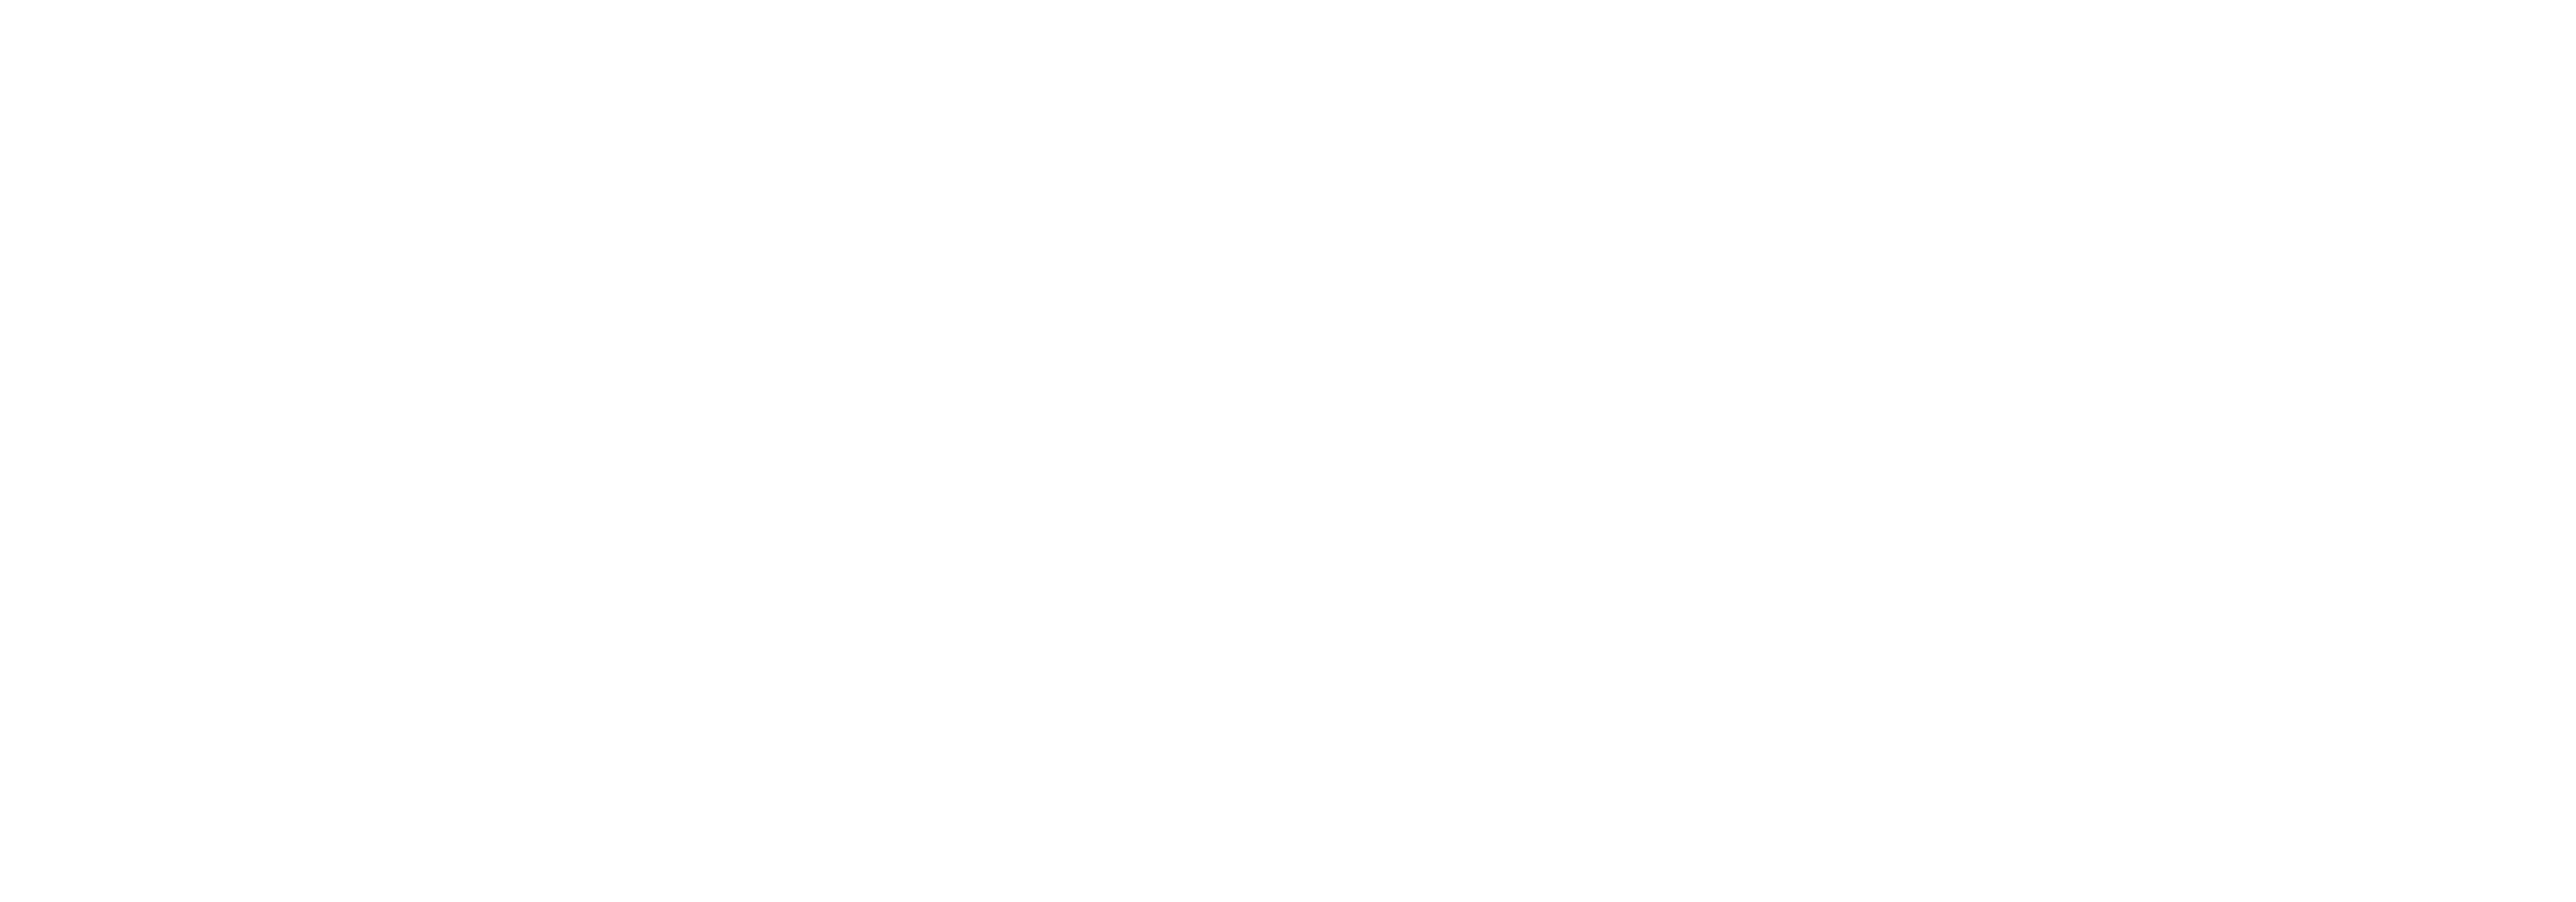 Madrid Secreto